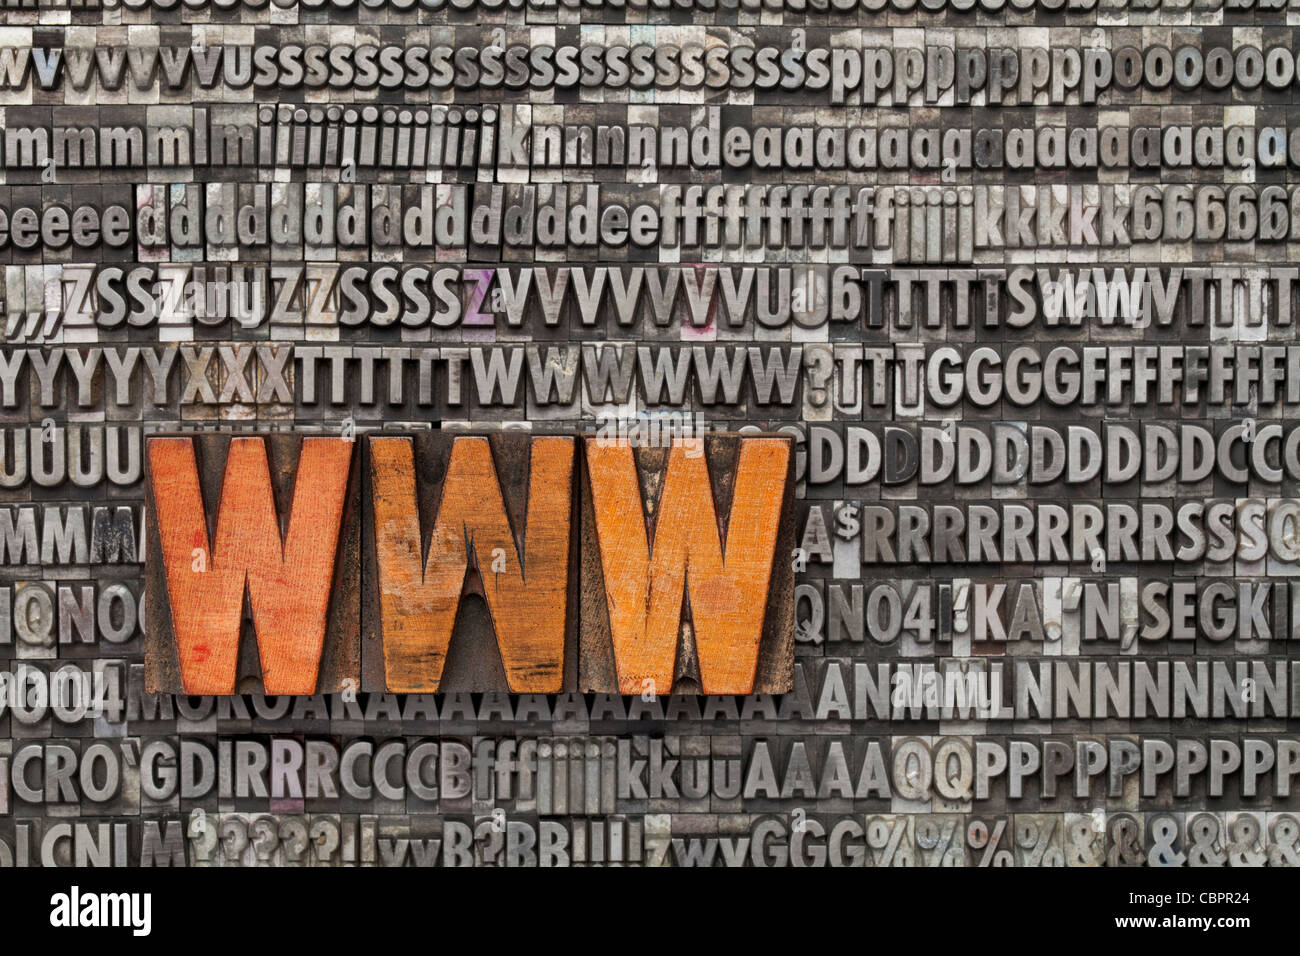 www acronym - internet concept - text in vintage wood letterpress printing blocks against grunge metal typeset Stock Photo